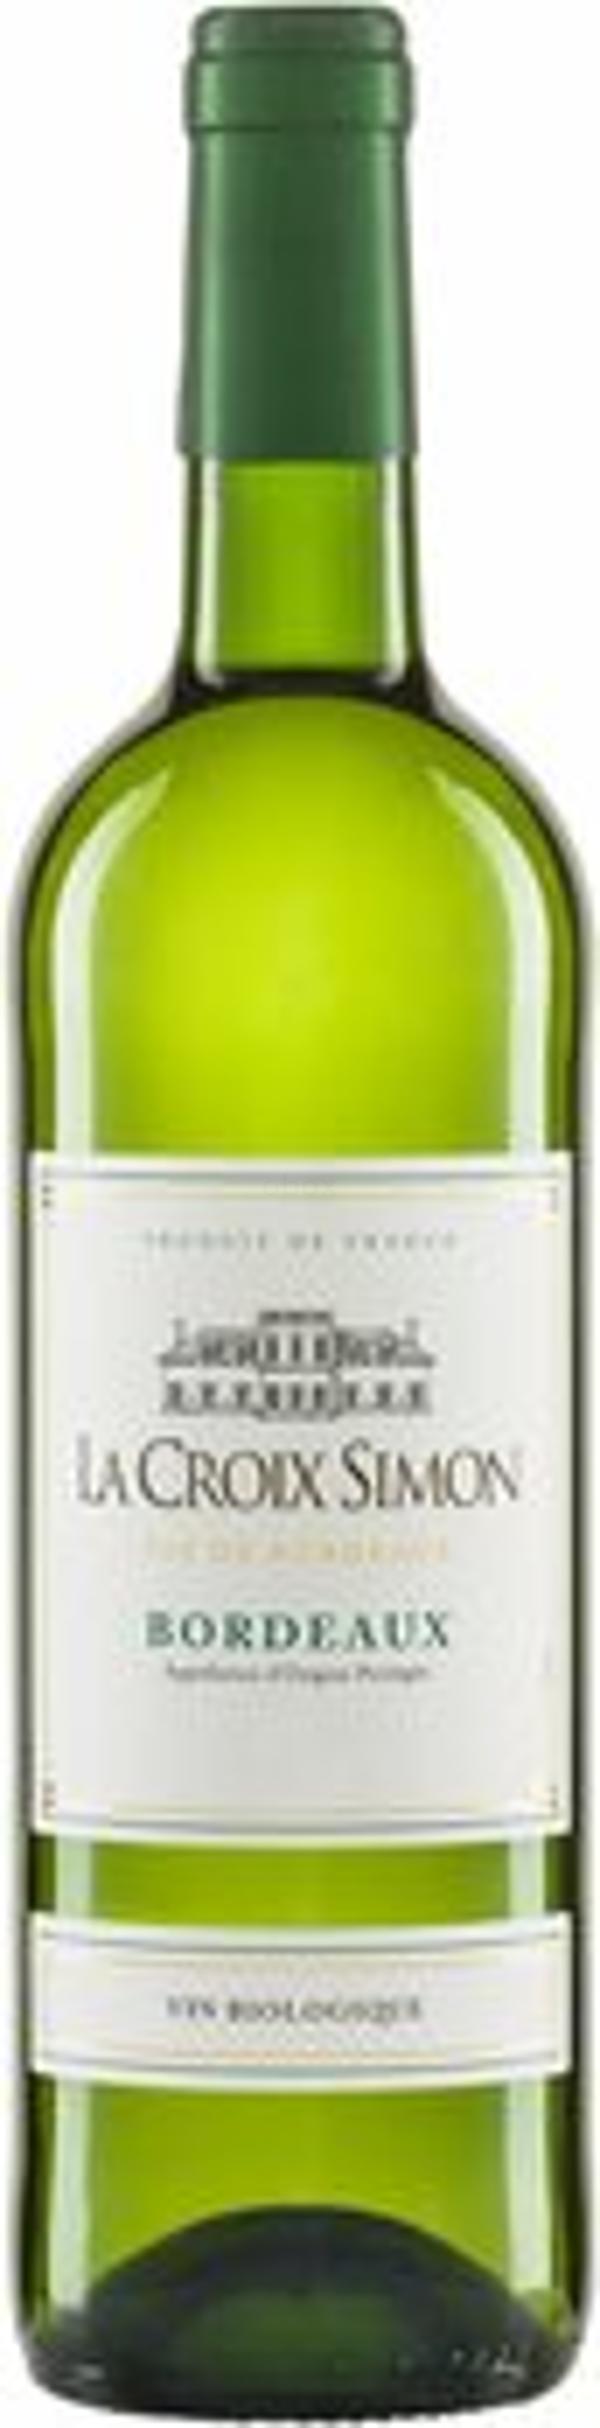 Produktfoto zu La Croix Simon Bordeaux Blanc AOP,Weißwein trocken 0,75l